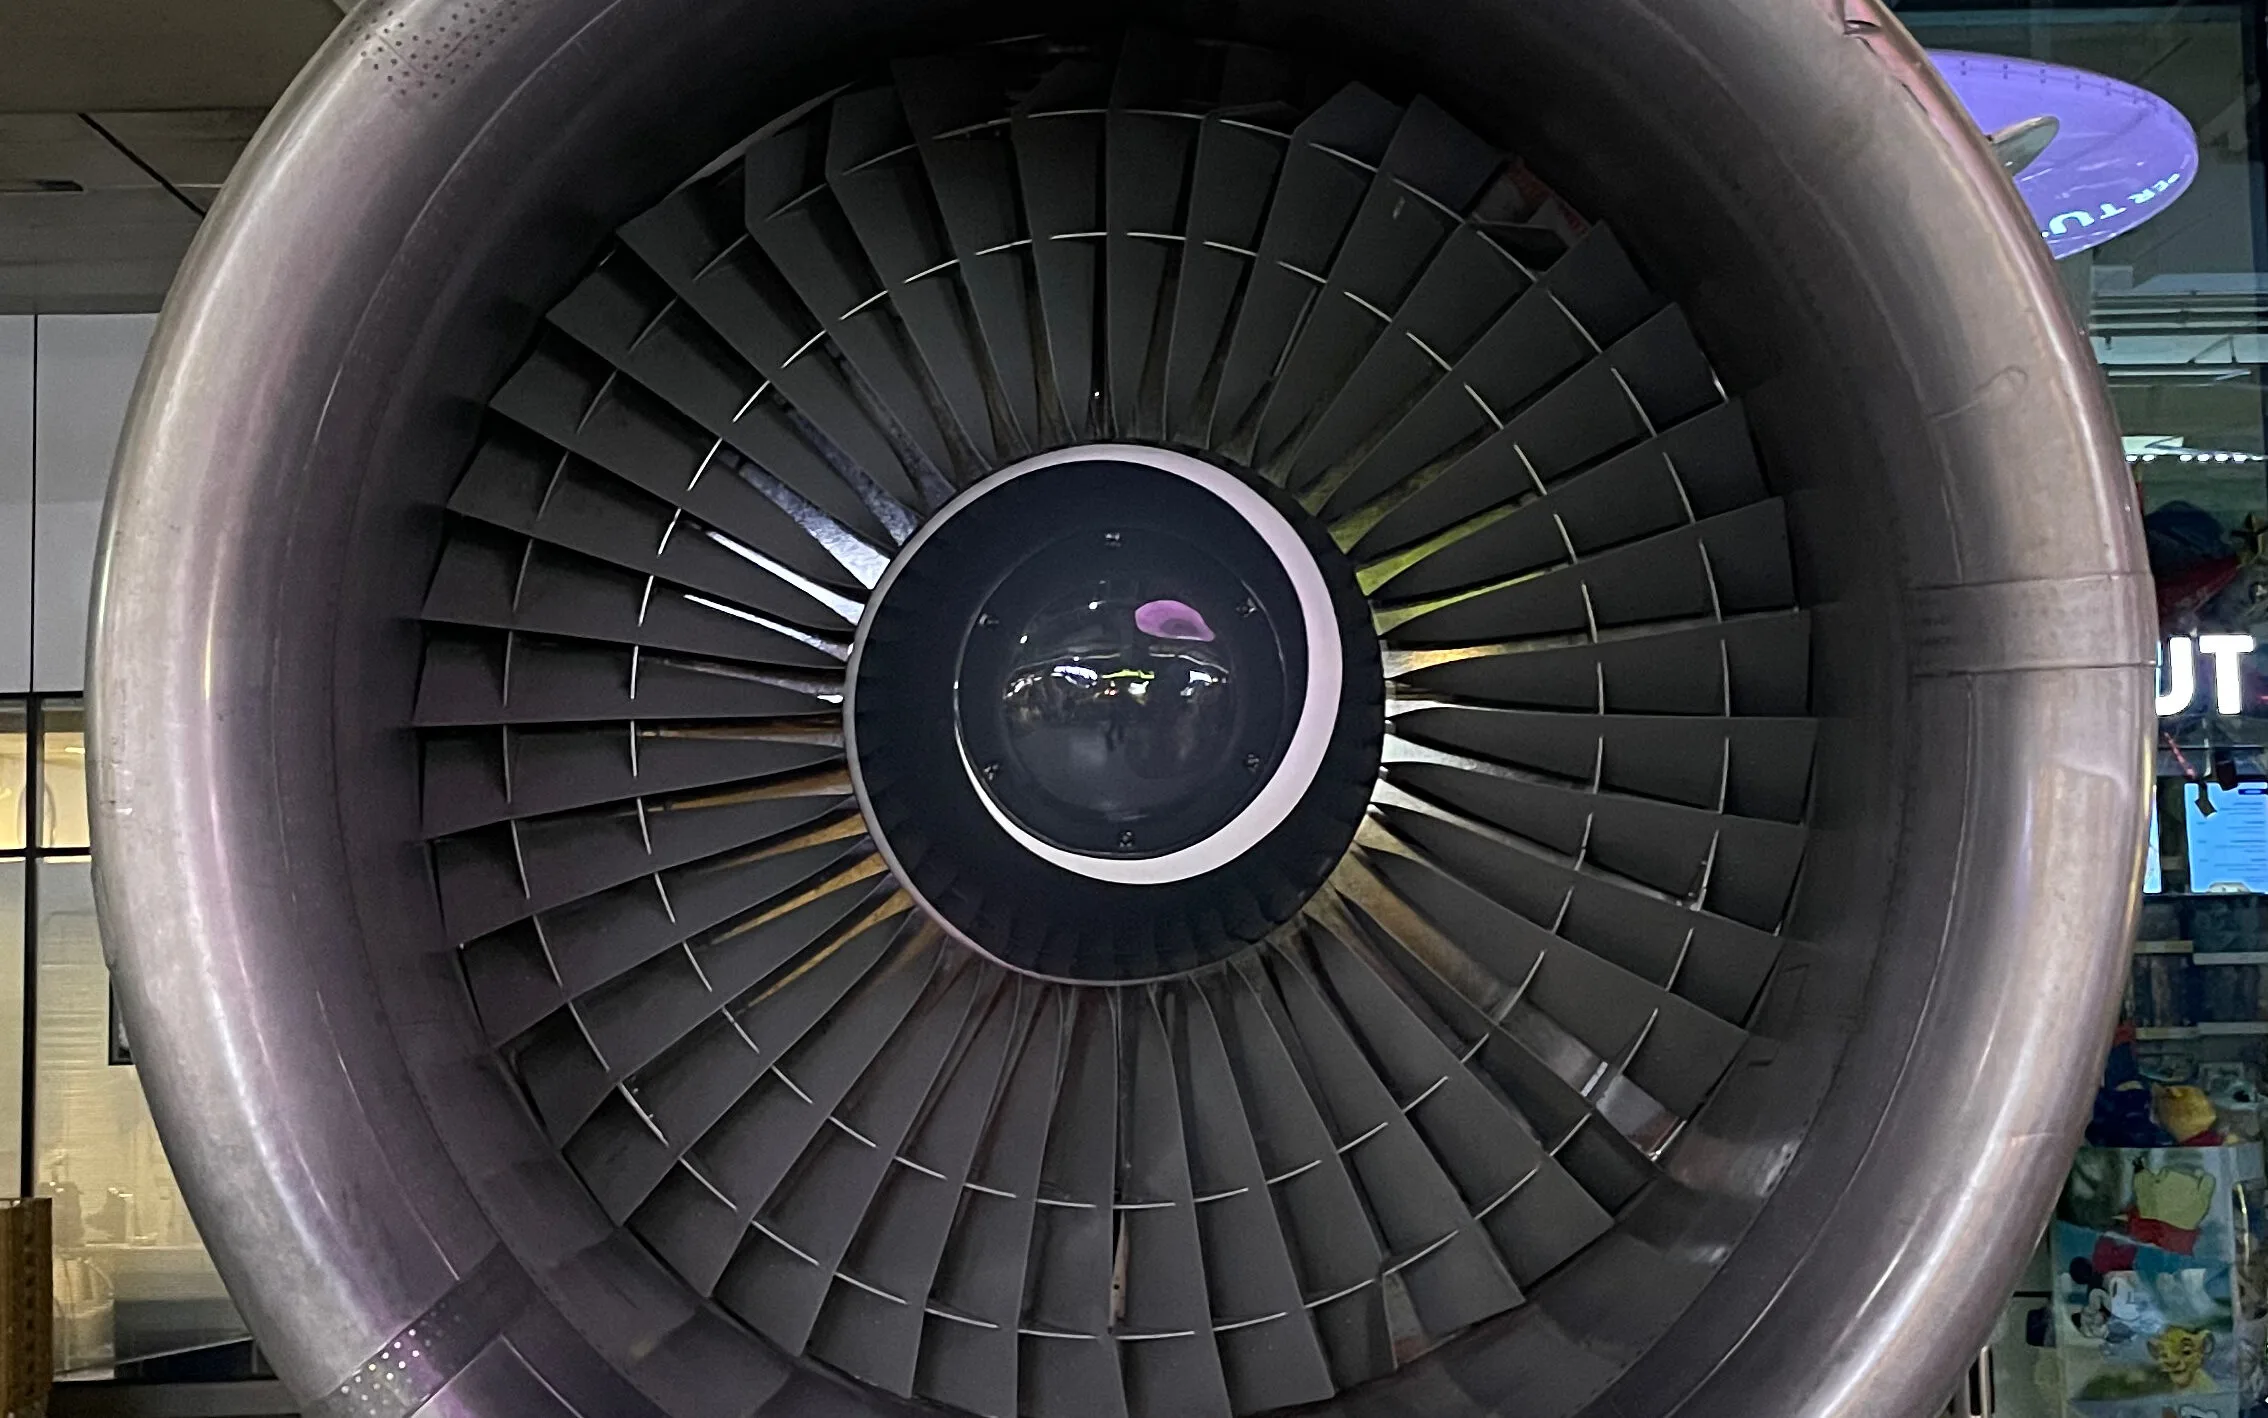 Airplane Engine on display at Amsterdam Schipol Airport